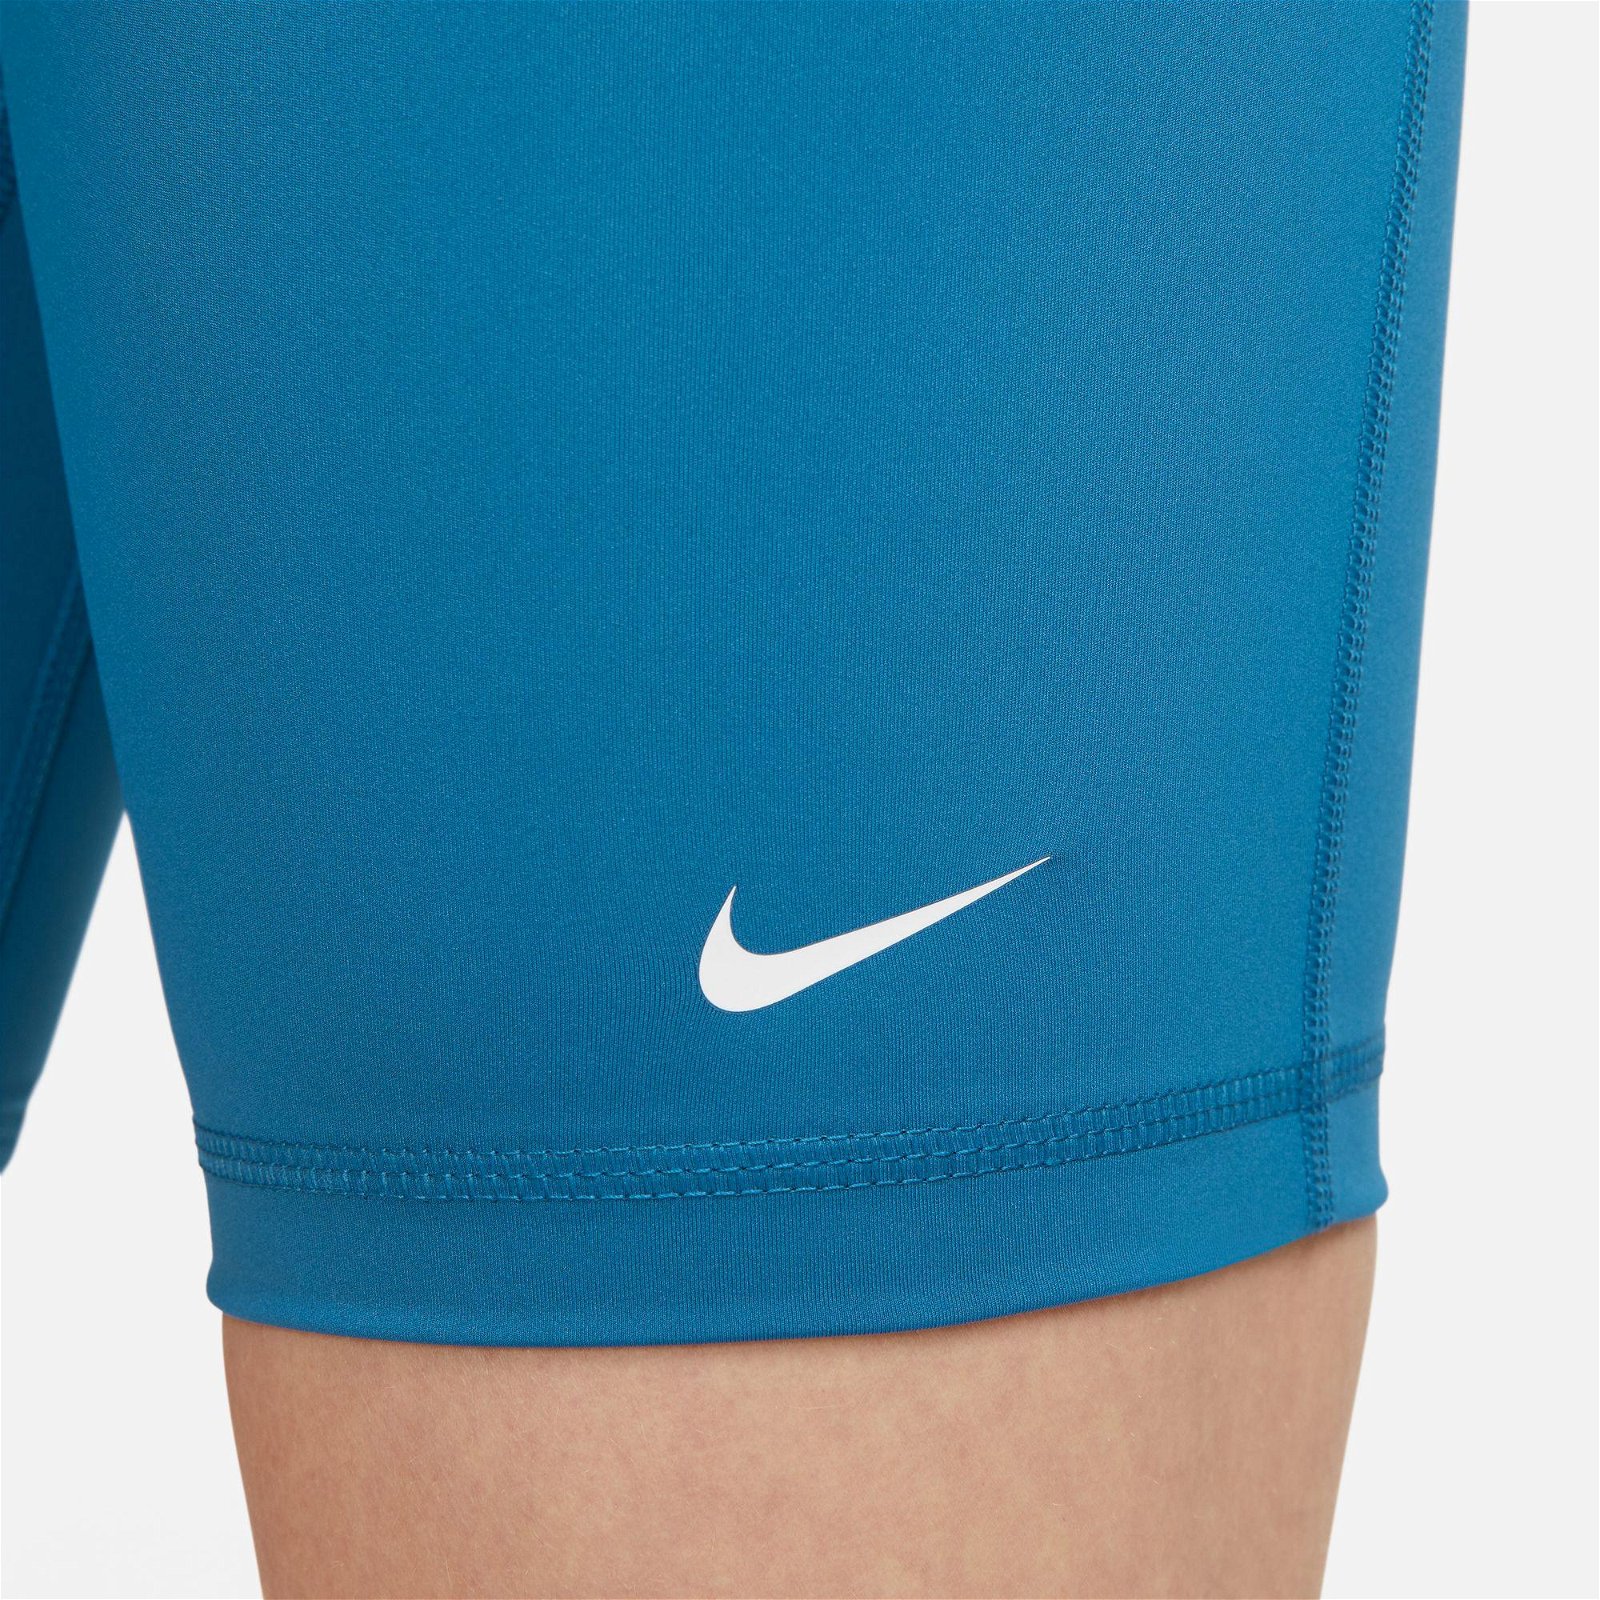 Nike Pro 365 Short 18 cm High Rise Kadın Mavi Tayt